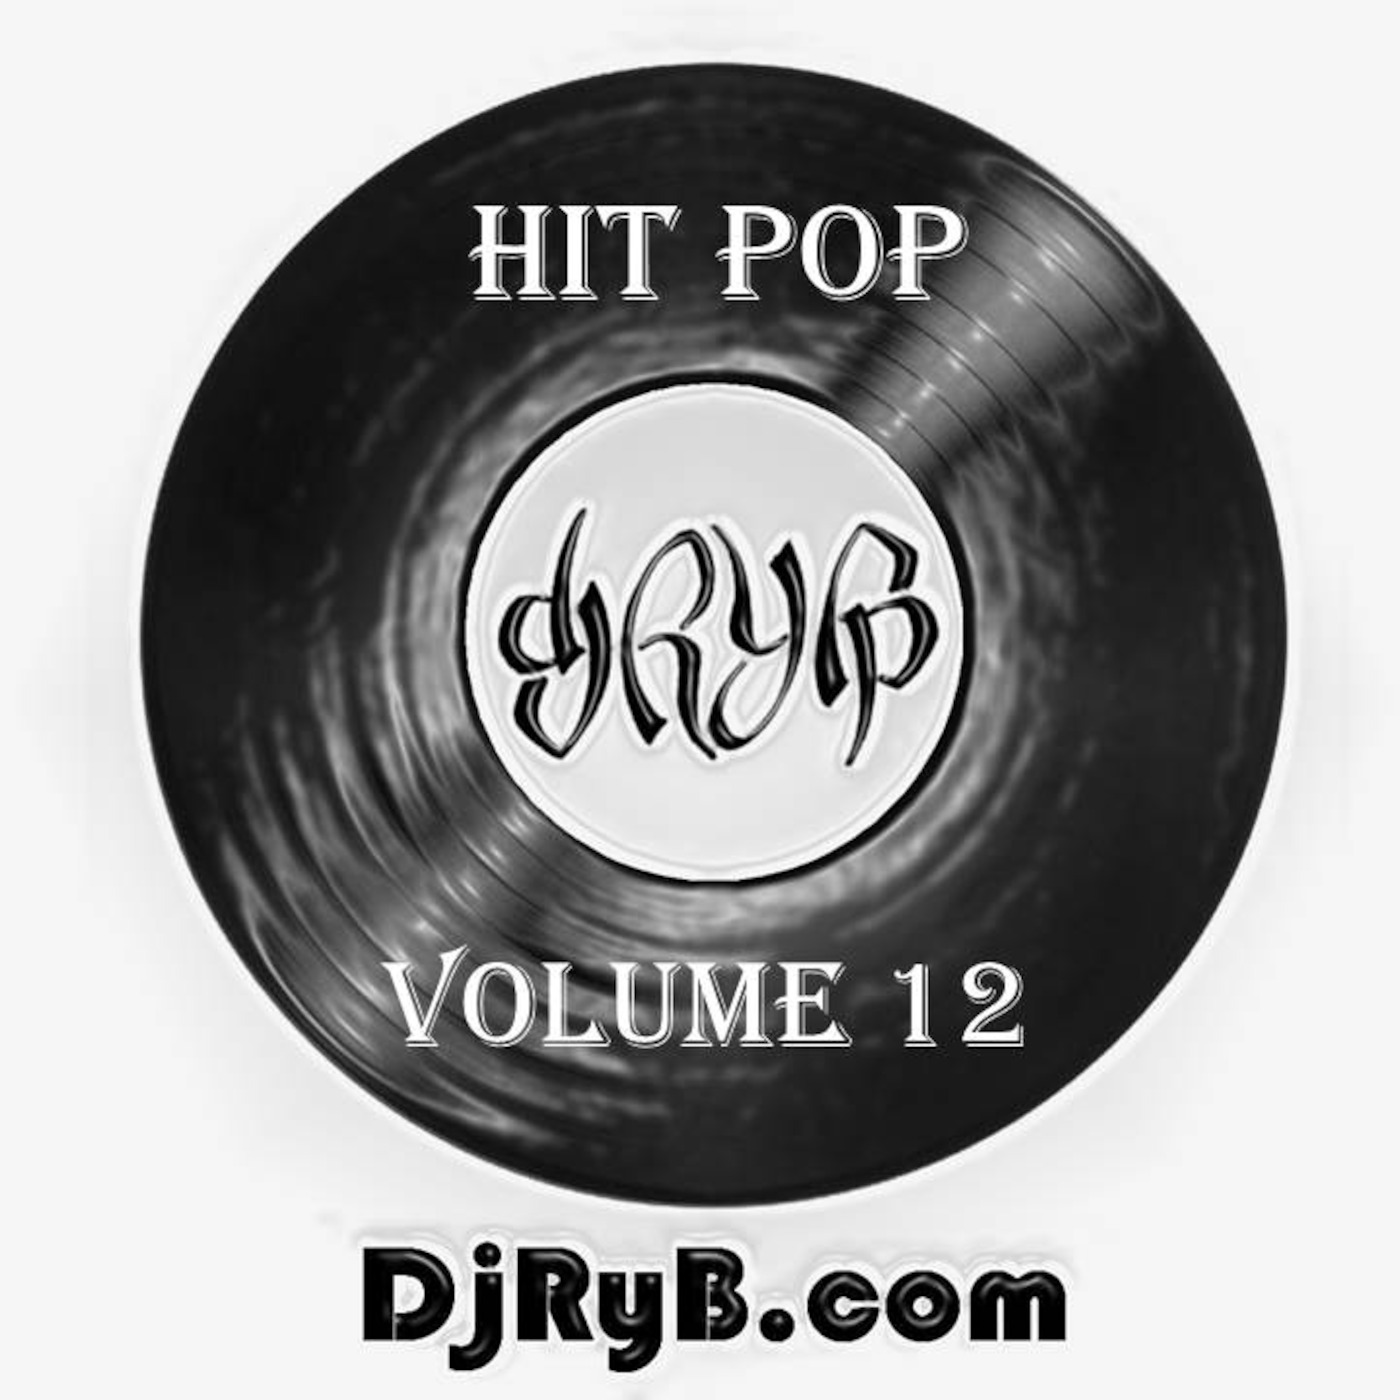 Hit Pop Volume 12 - Dj RyB